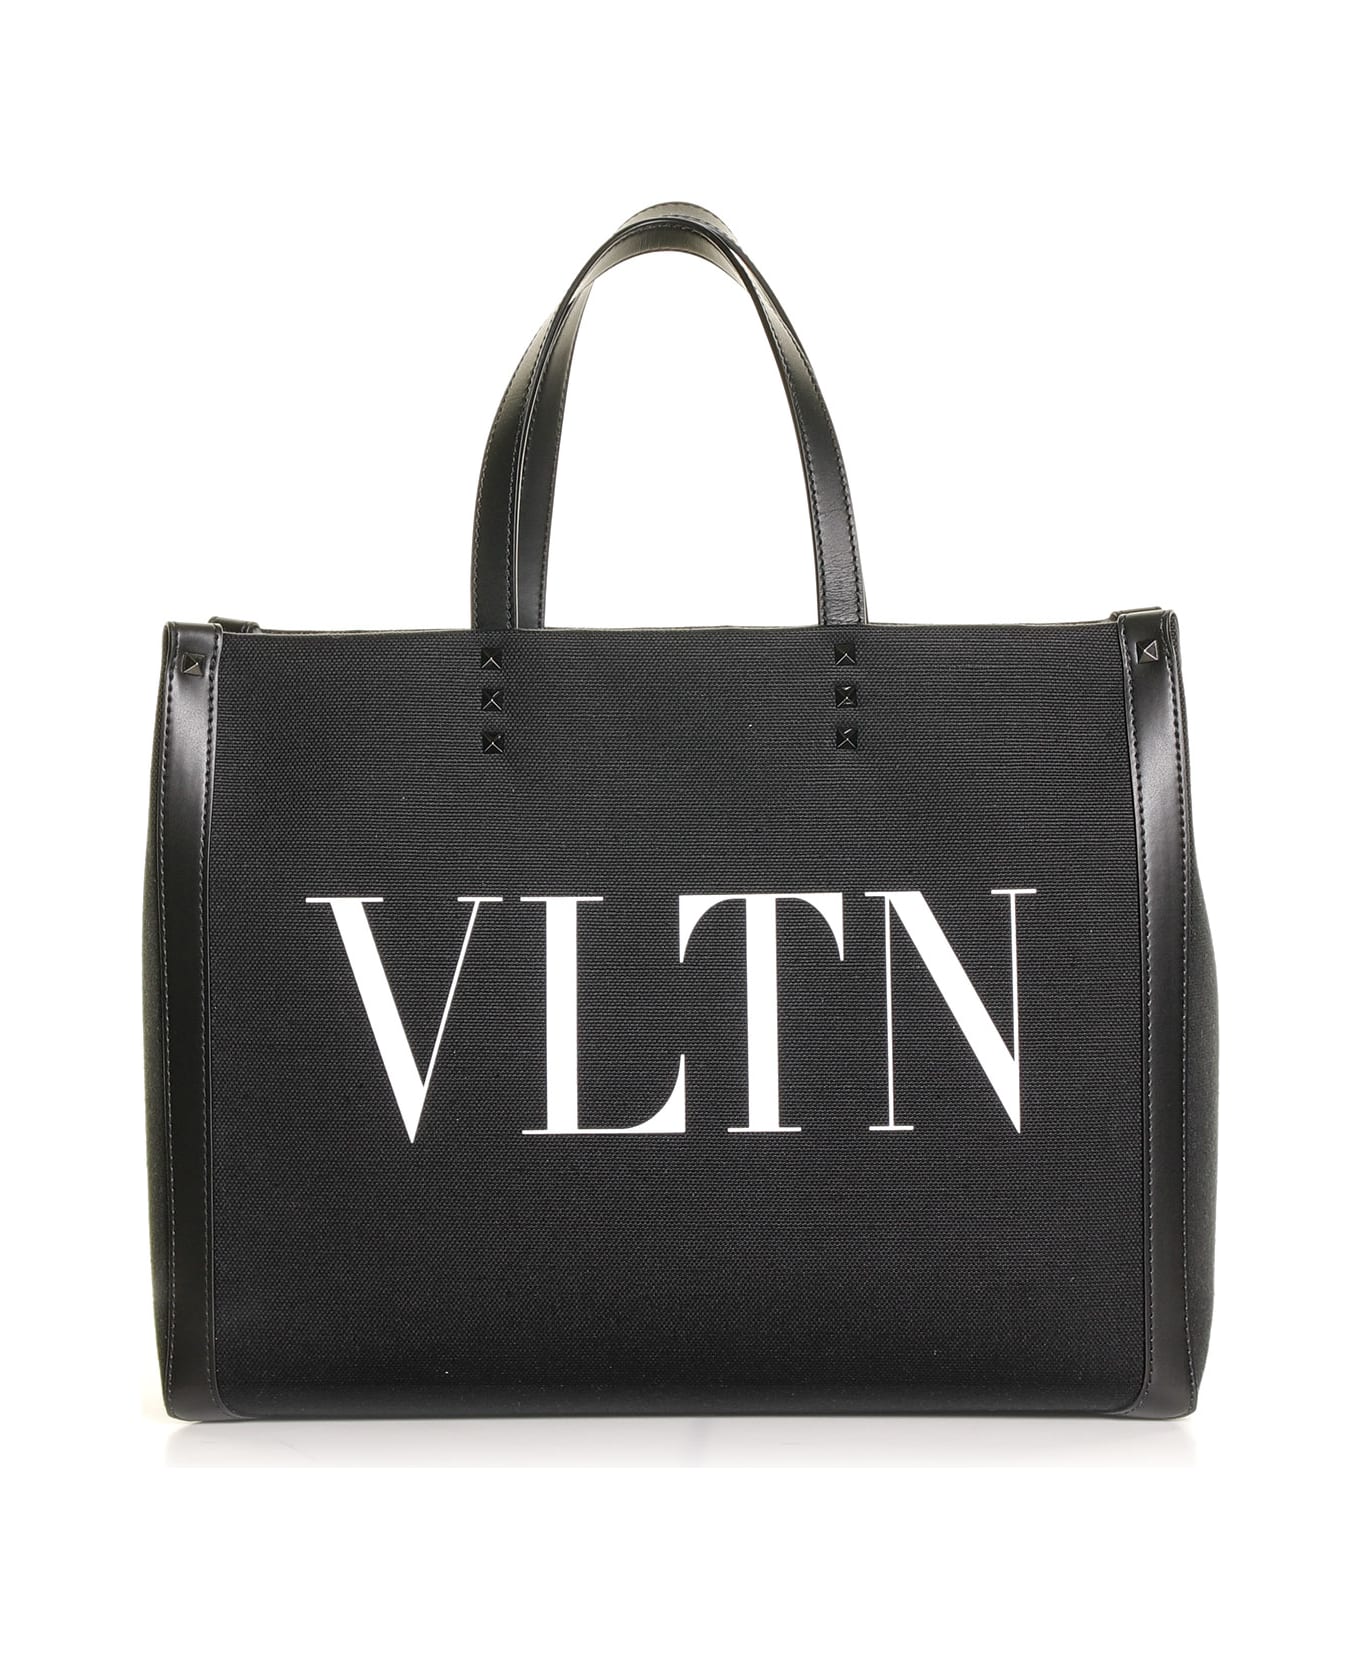 Valentino Garavani Canvas Shopping Bag With Logo - NERO BIANCO トートバッグ